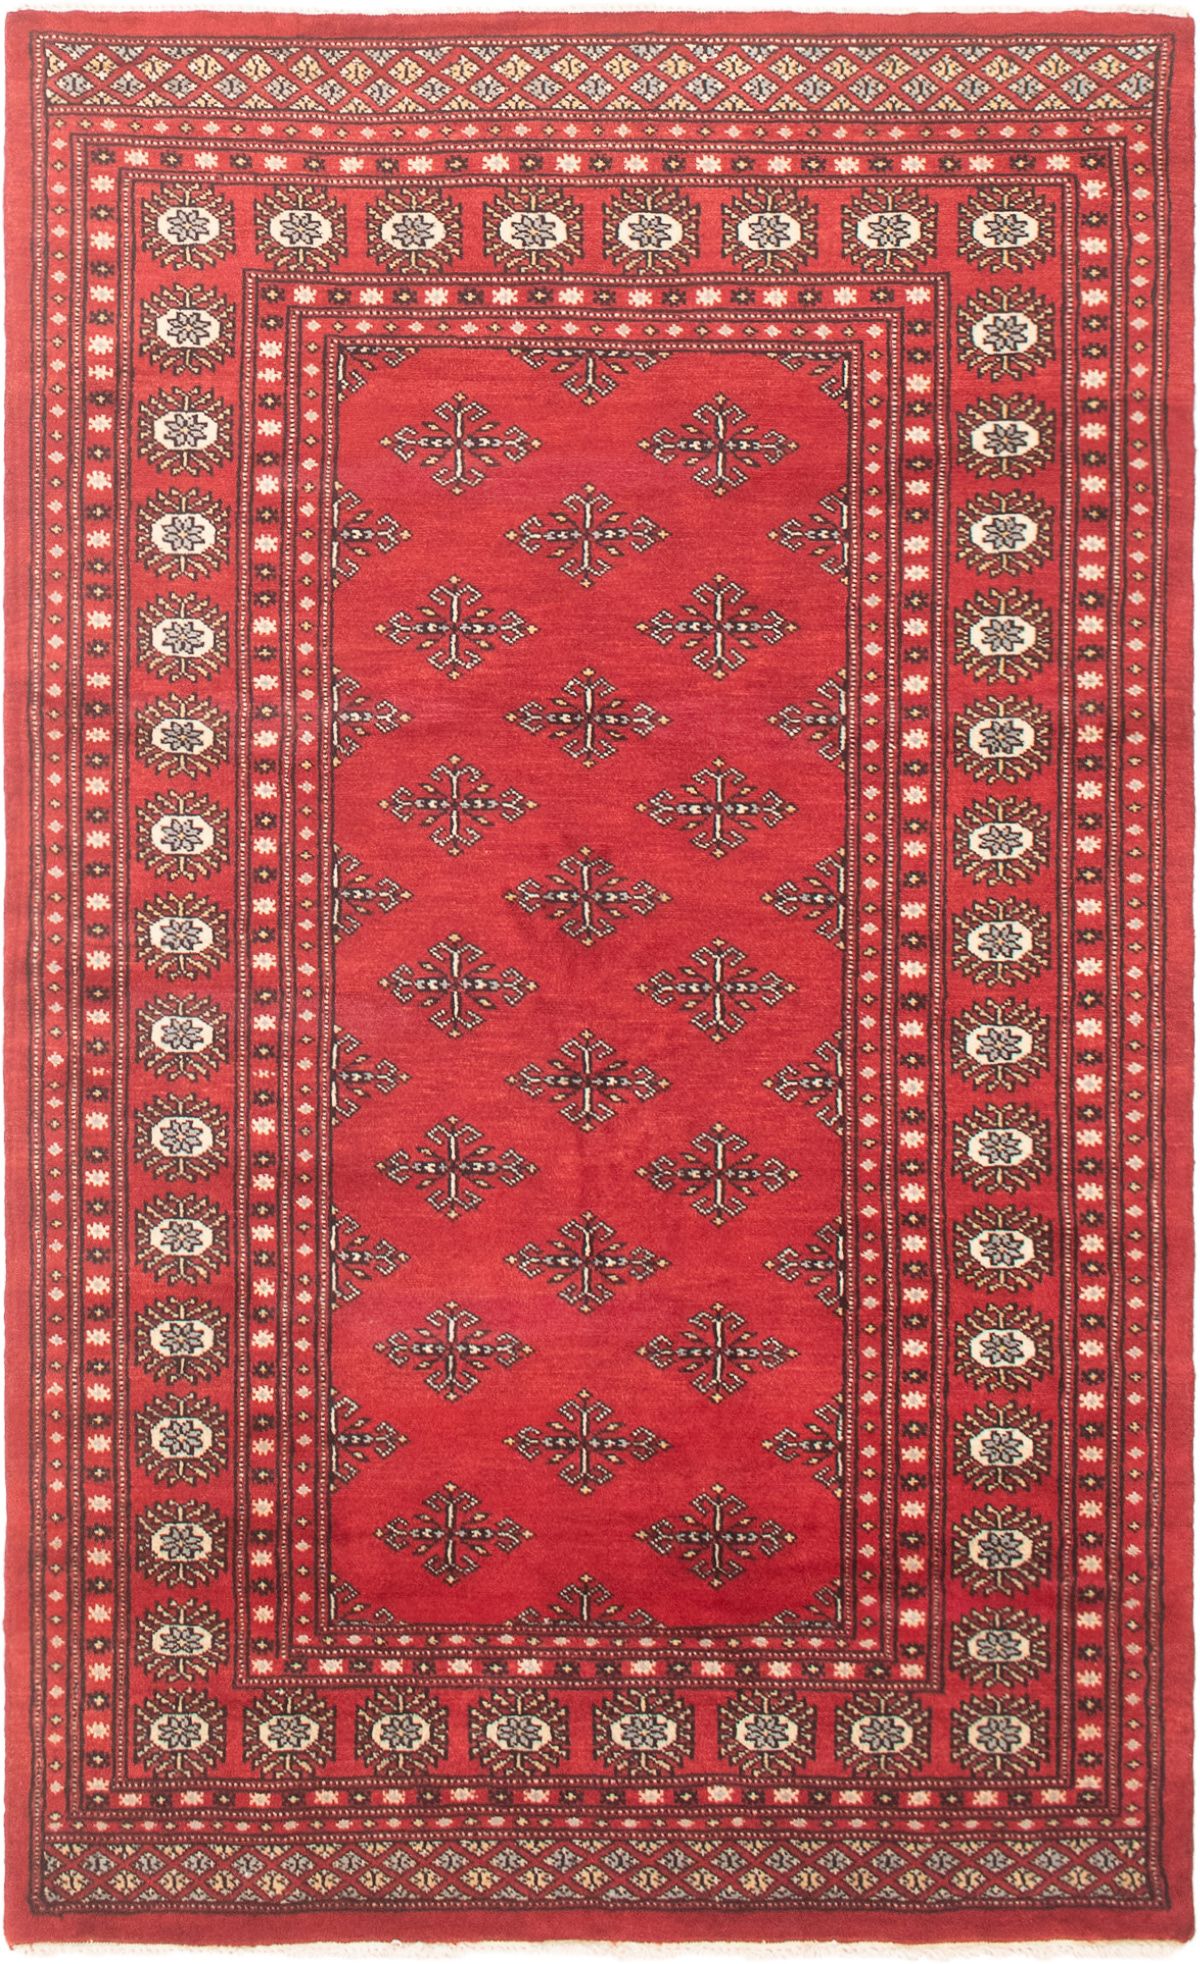 Hand-knotted Finest Peshawar Bokhara Dark Red Wool Rug 3'10" x 6'5" Size: 3'10" x 6'5"  